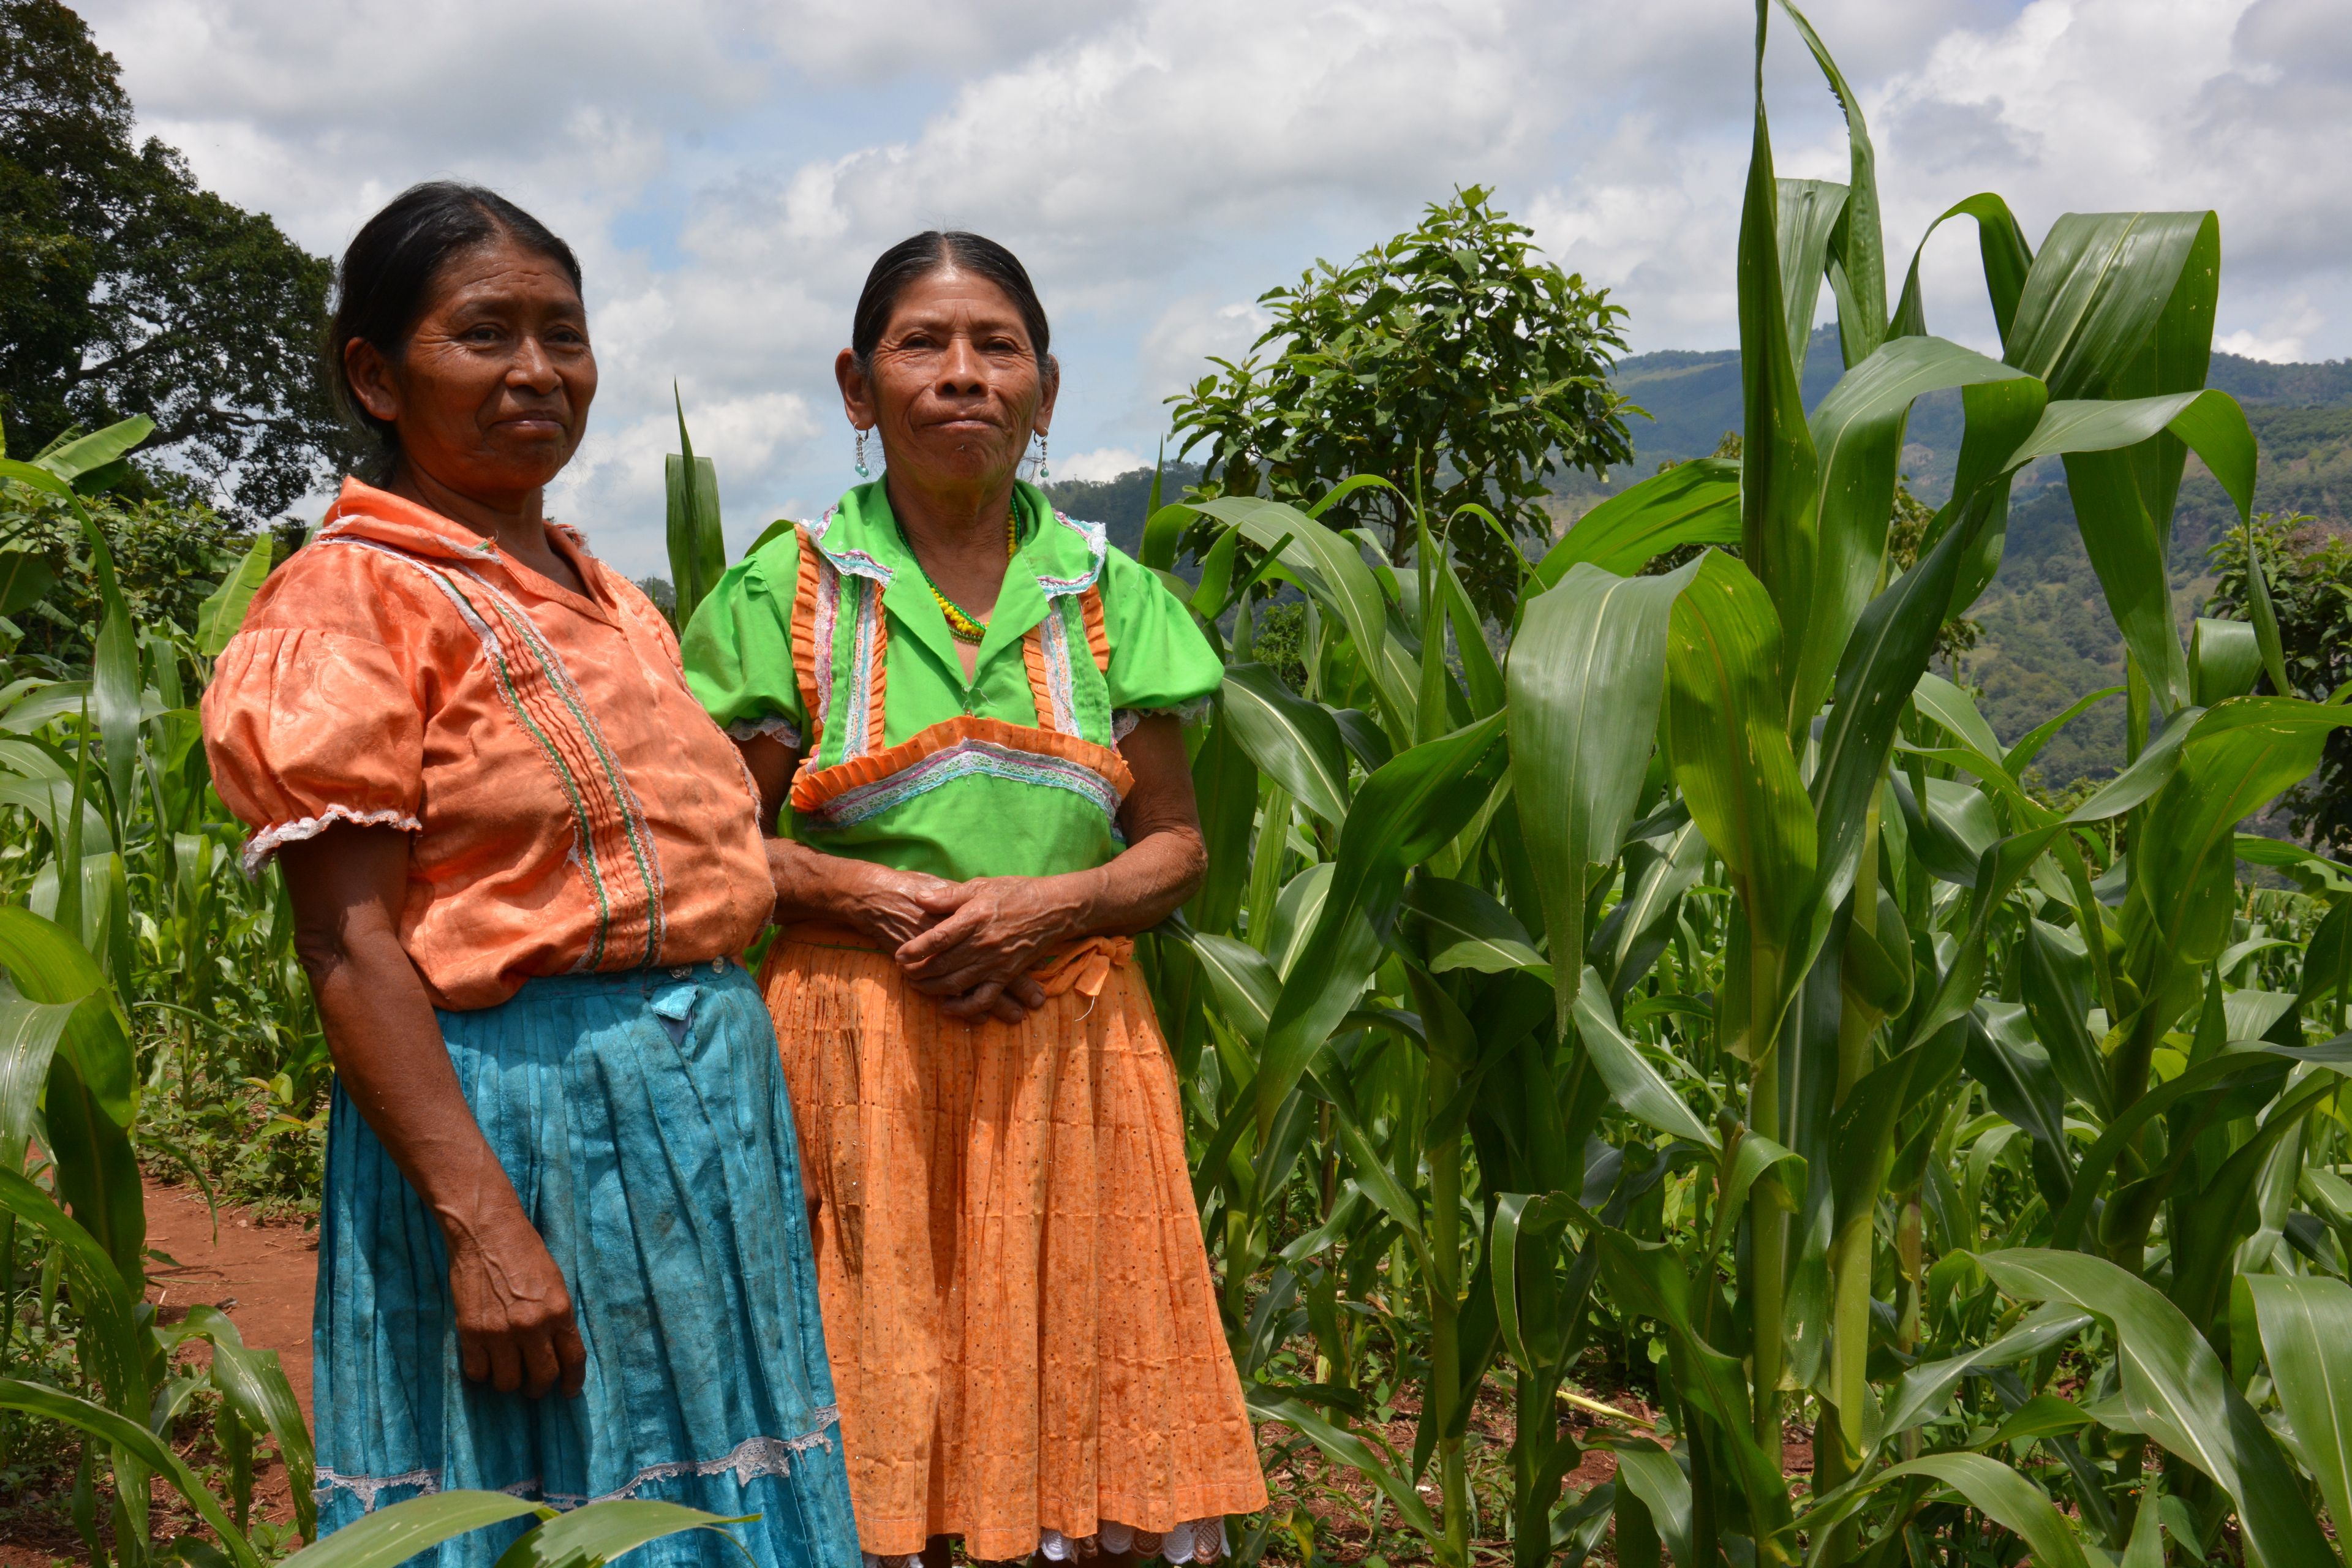 Two Chorti women from El Bendito, Guatemala